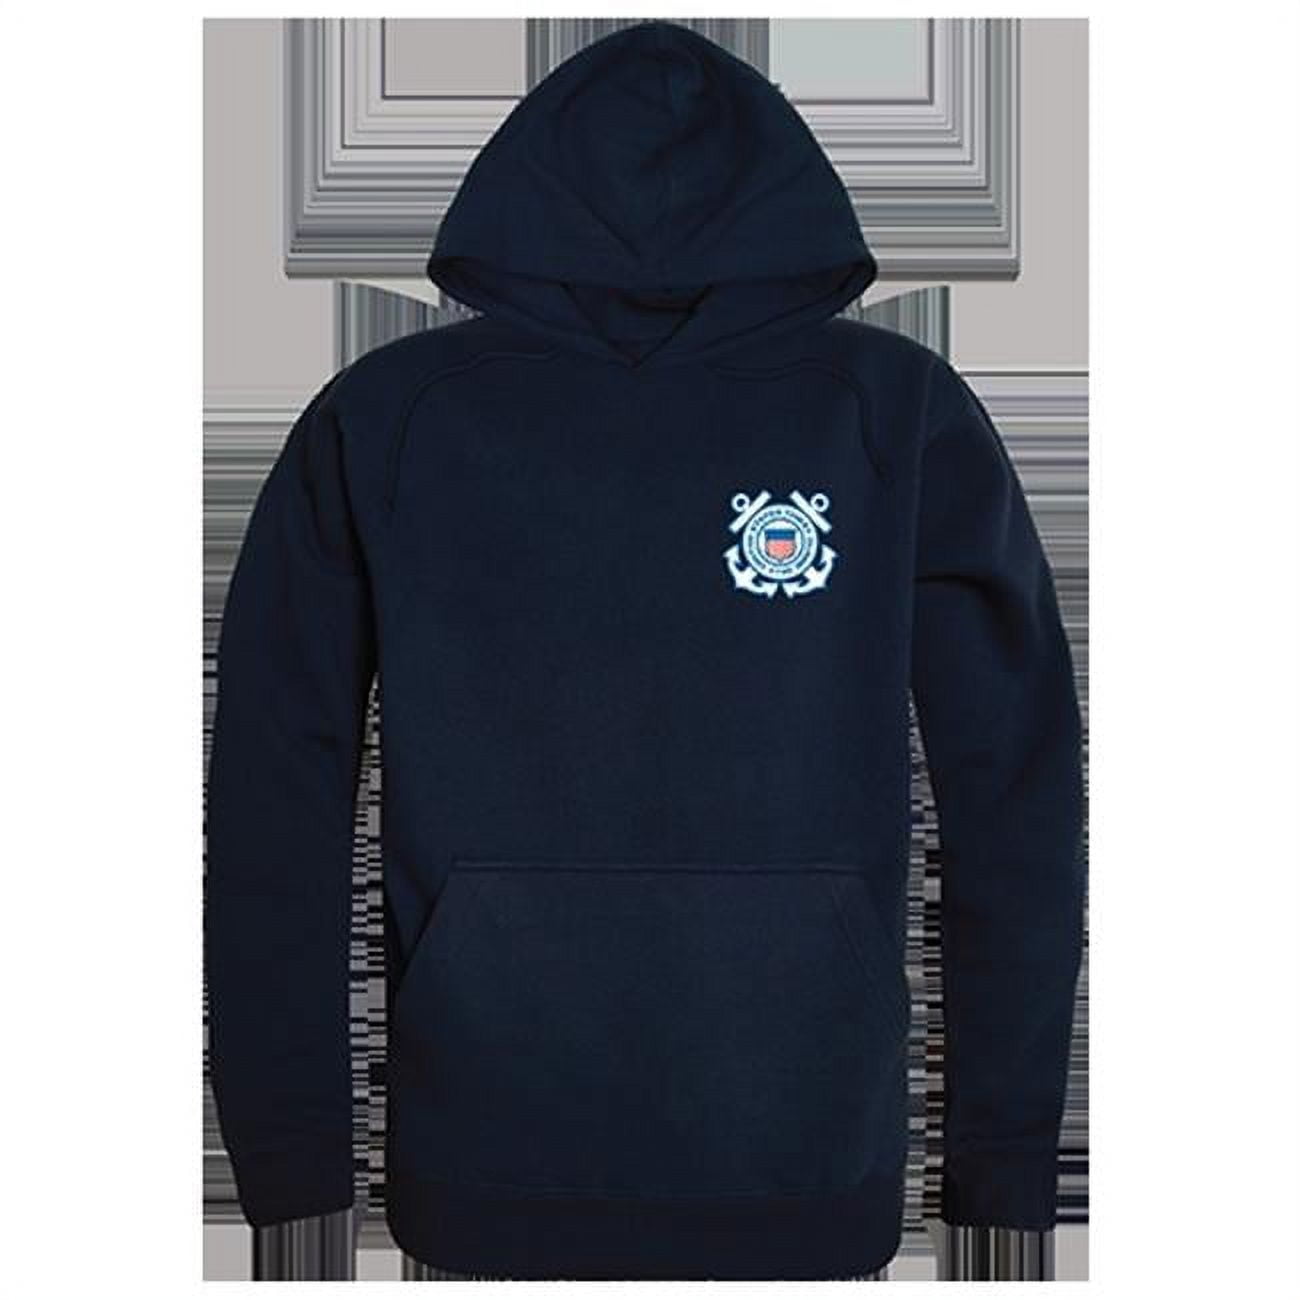 BUGELAI Sza S Jersey SOS merch Jacket Hoodies New Logo Women/Men Winter Sweatshirt Cosplay Baseball Uniform, Adult Unisex, Size: Medium, Blue